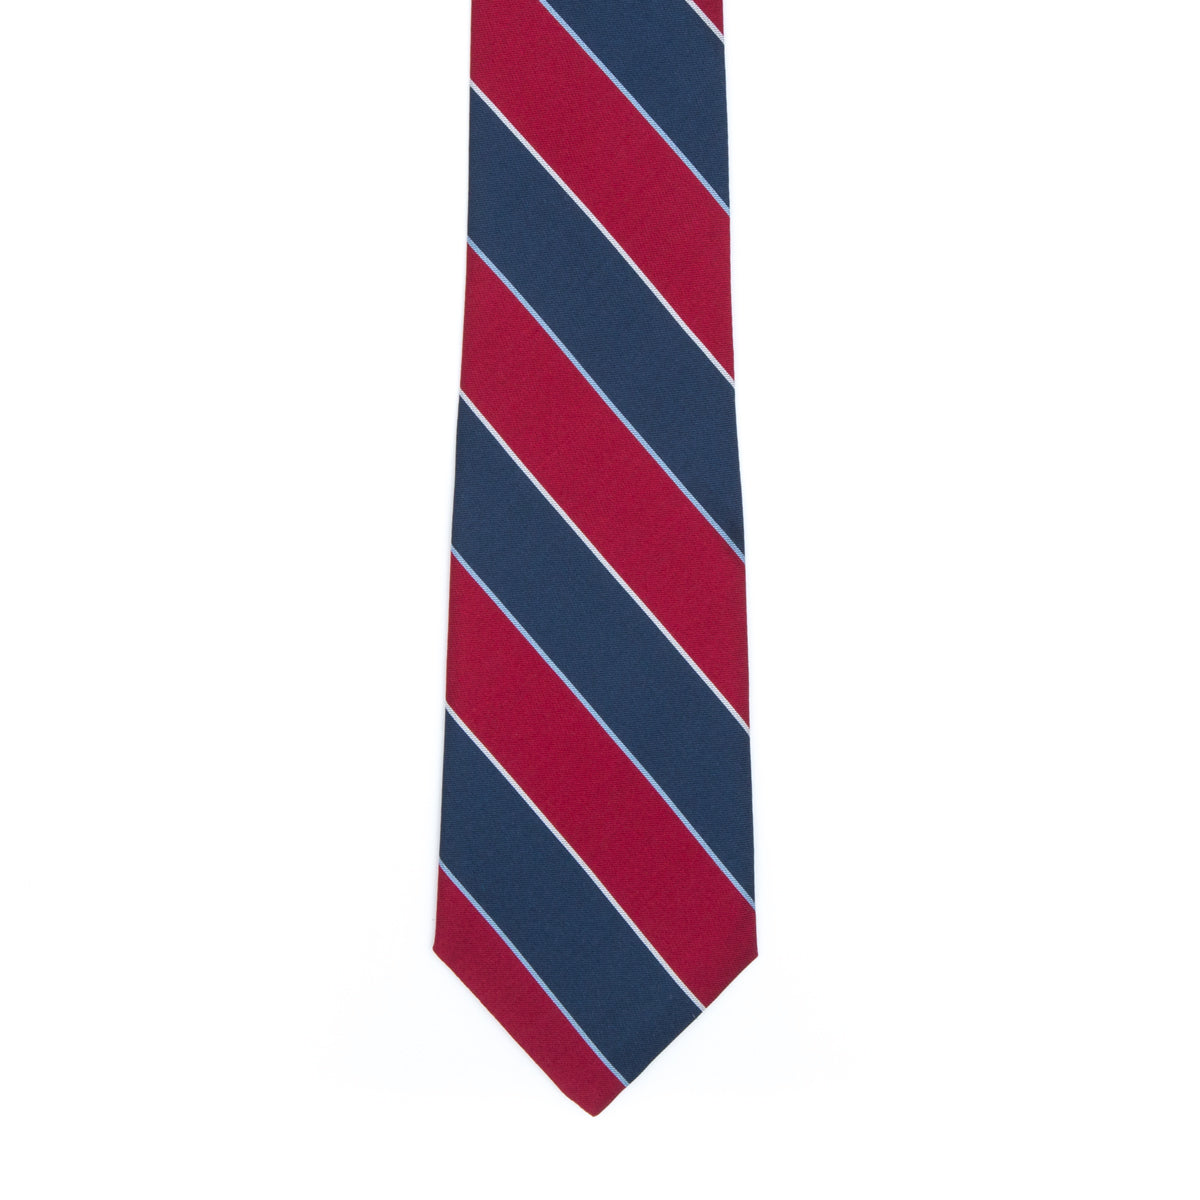 Two-tone striped tie